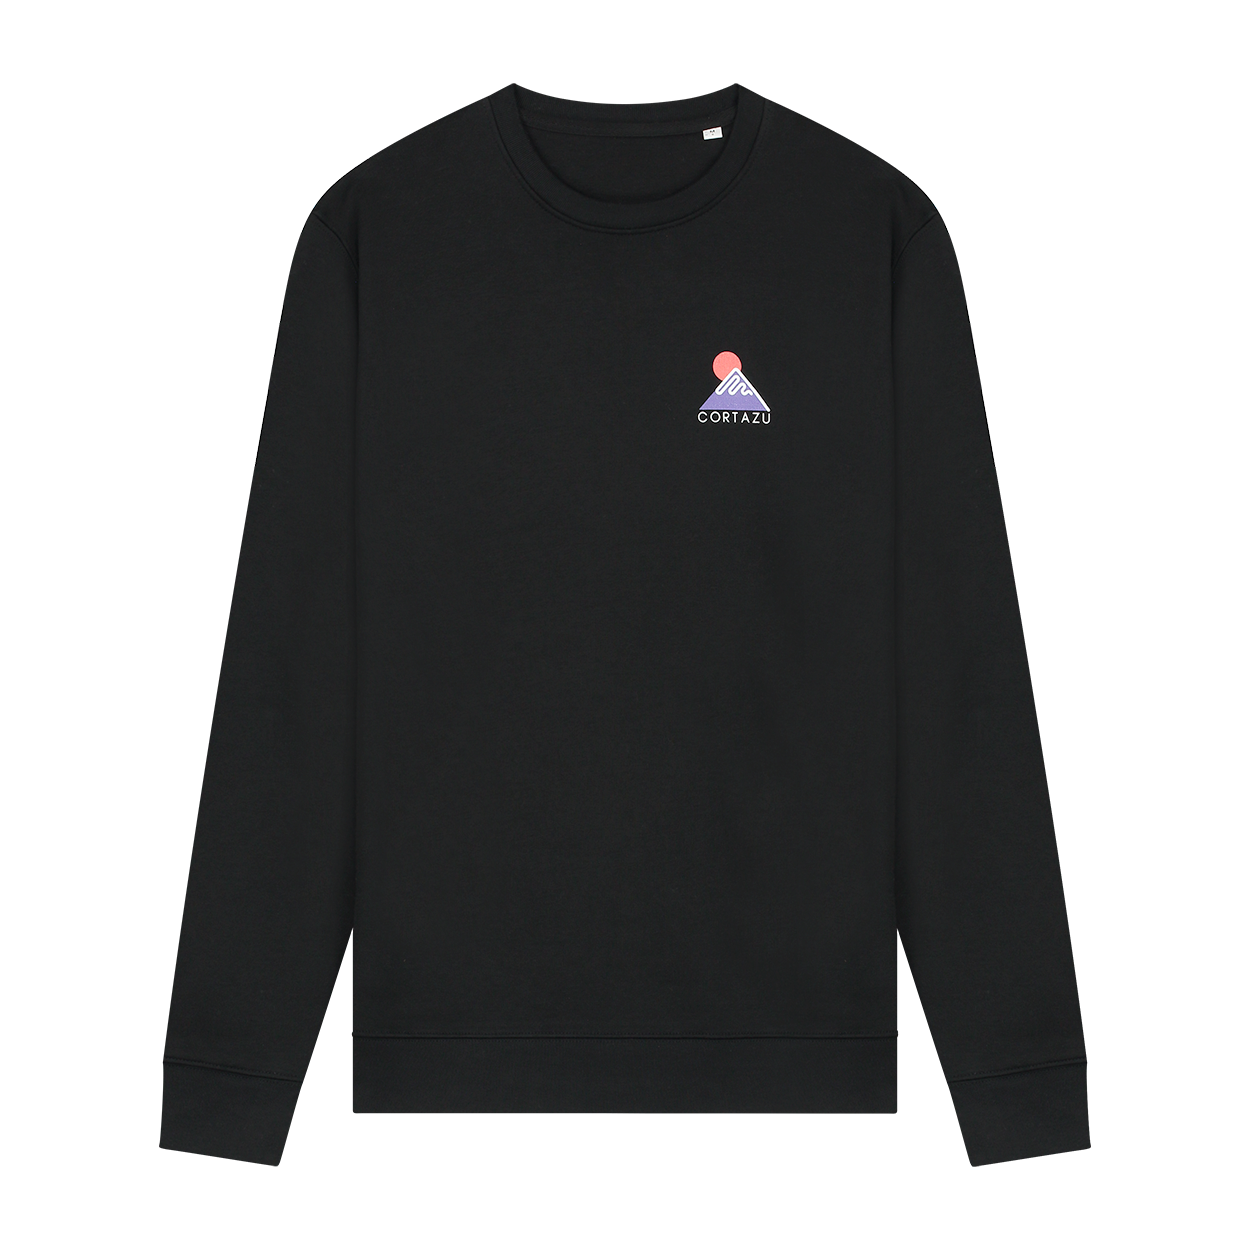 Sweater Sunrise | Black